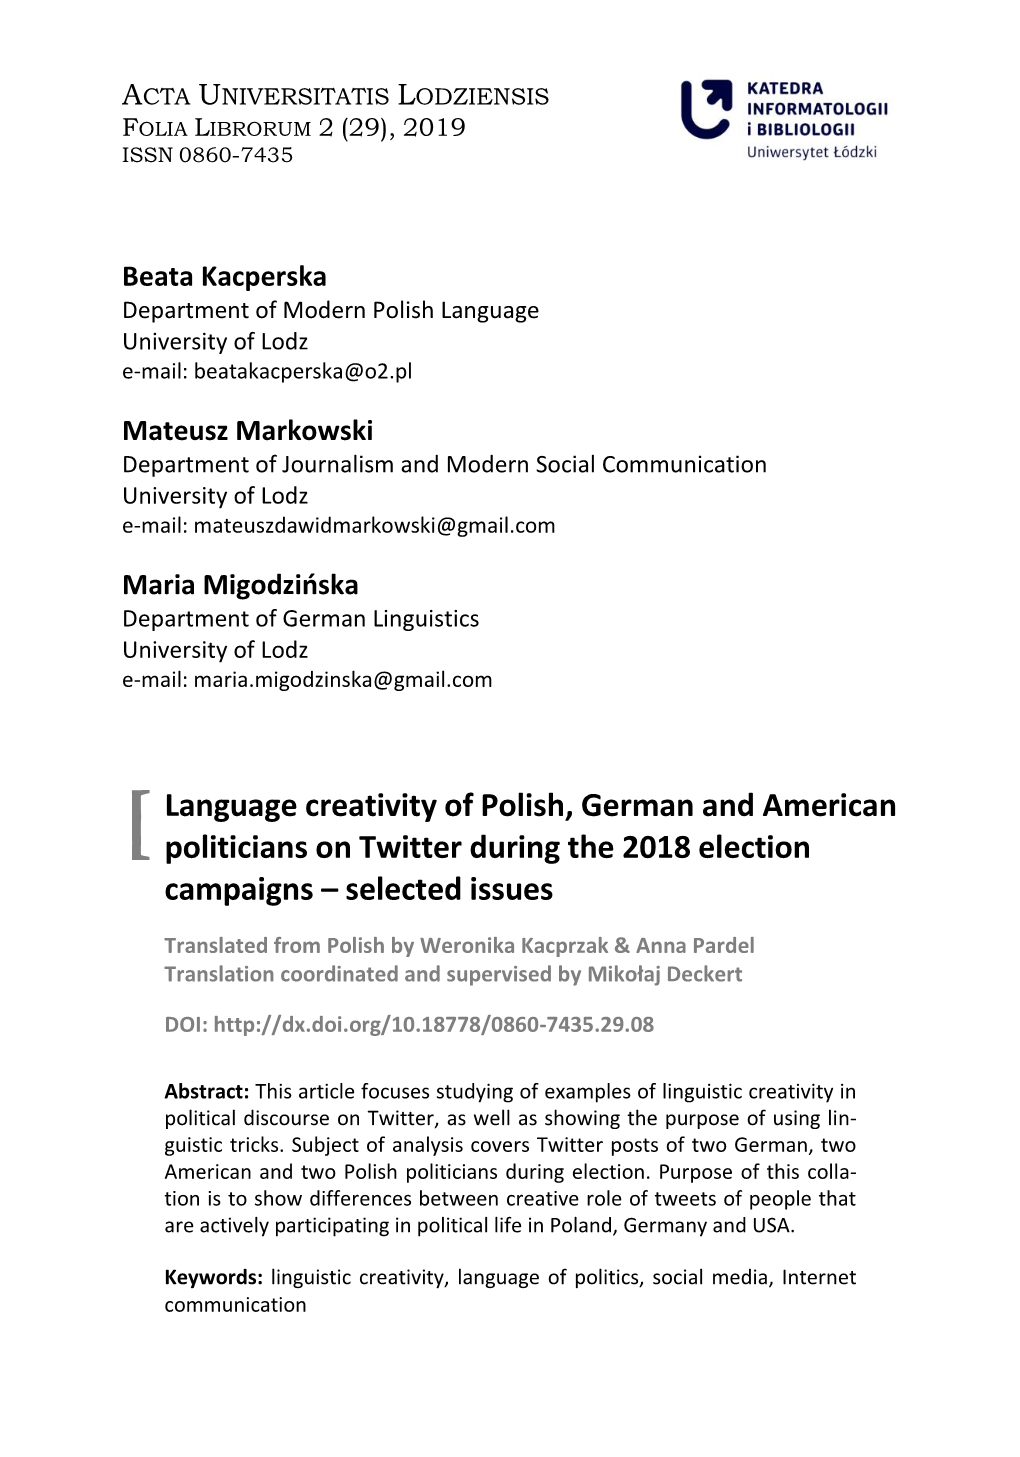 Language Creativity of Polish, German and American Politicians on Twitter